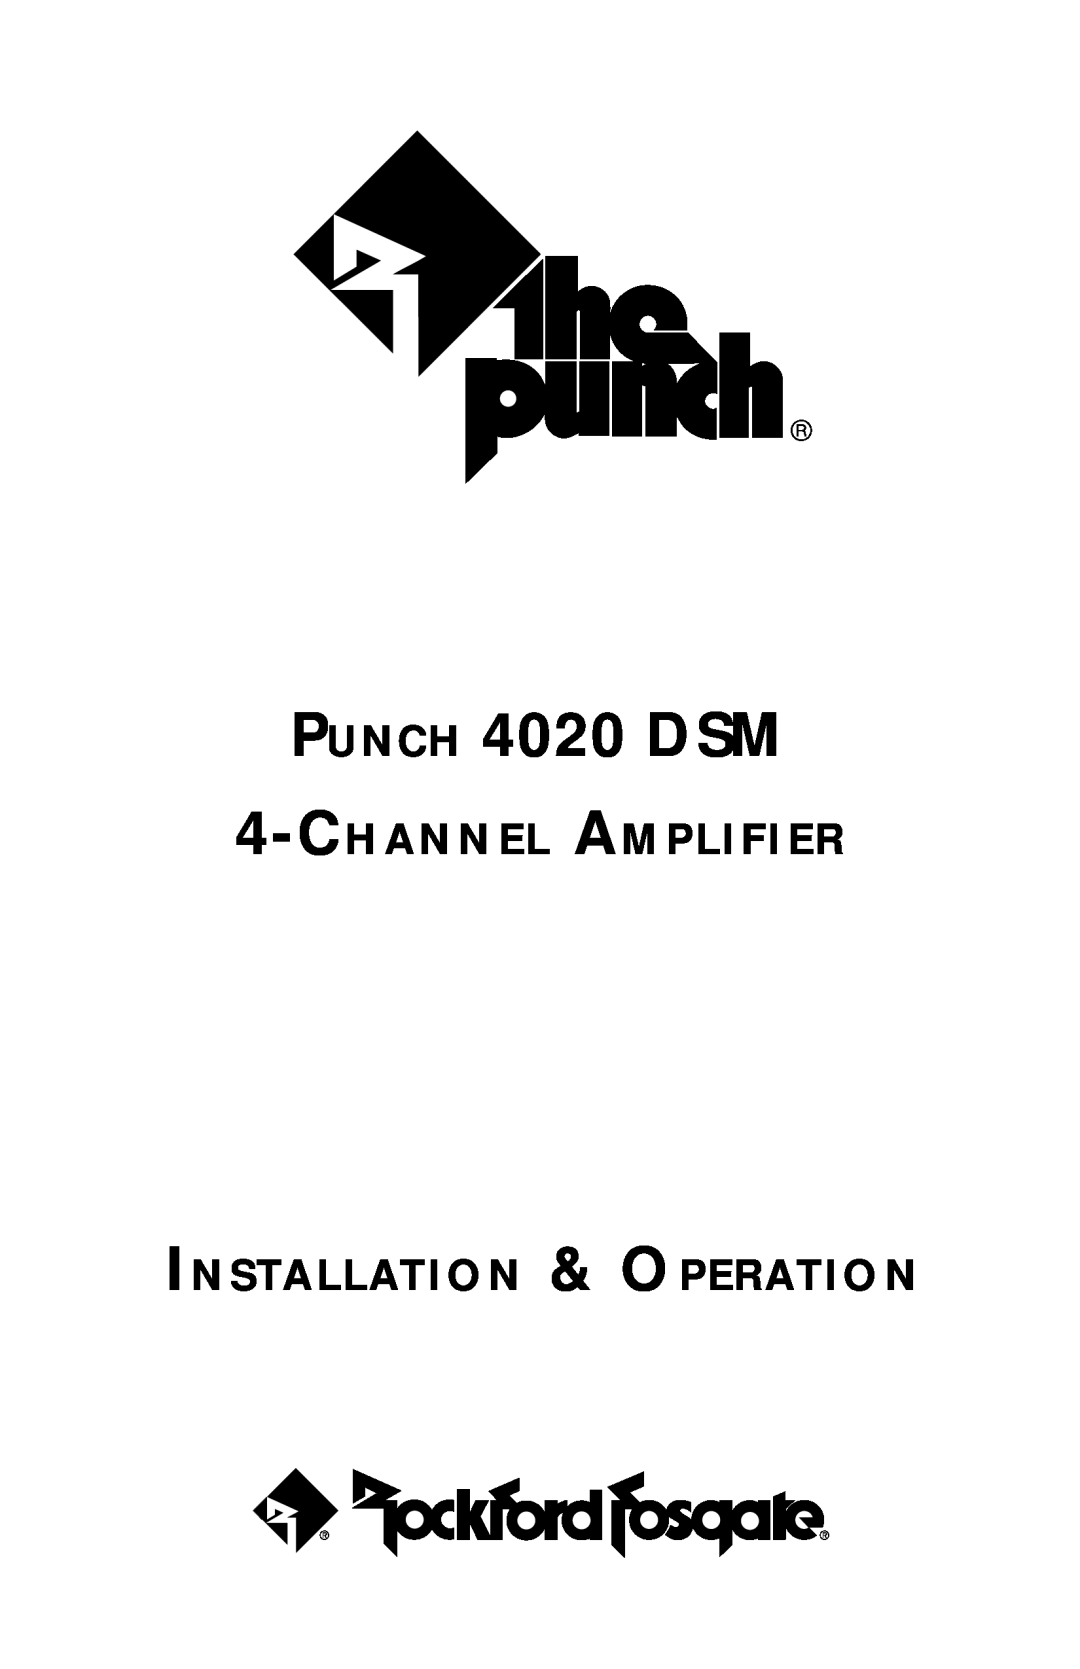 Rockford Fosgate PUNCH 4020 DSM manual Channel Amplifier Installation & Operation 